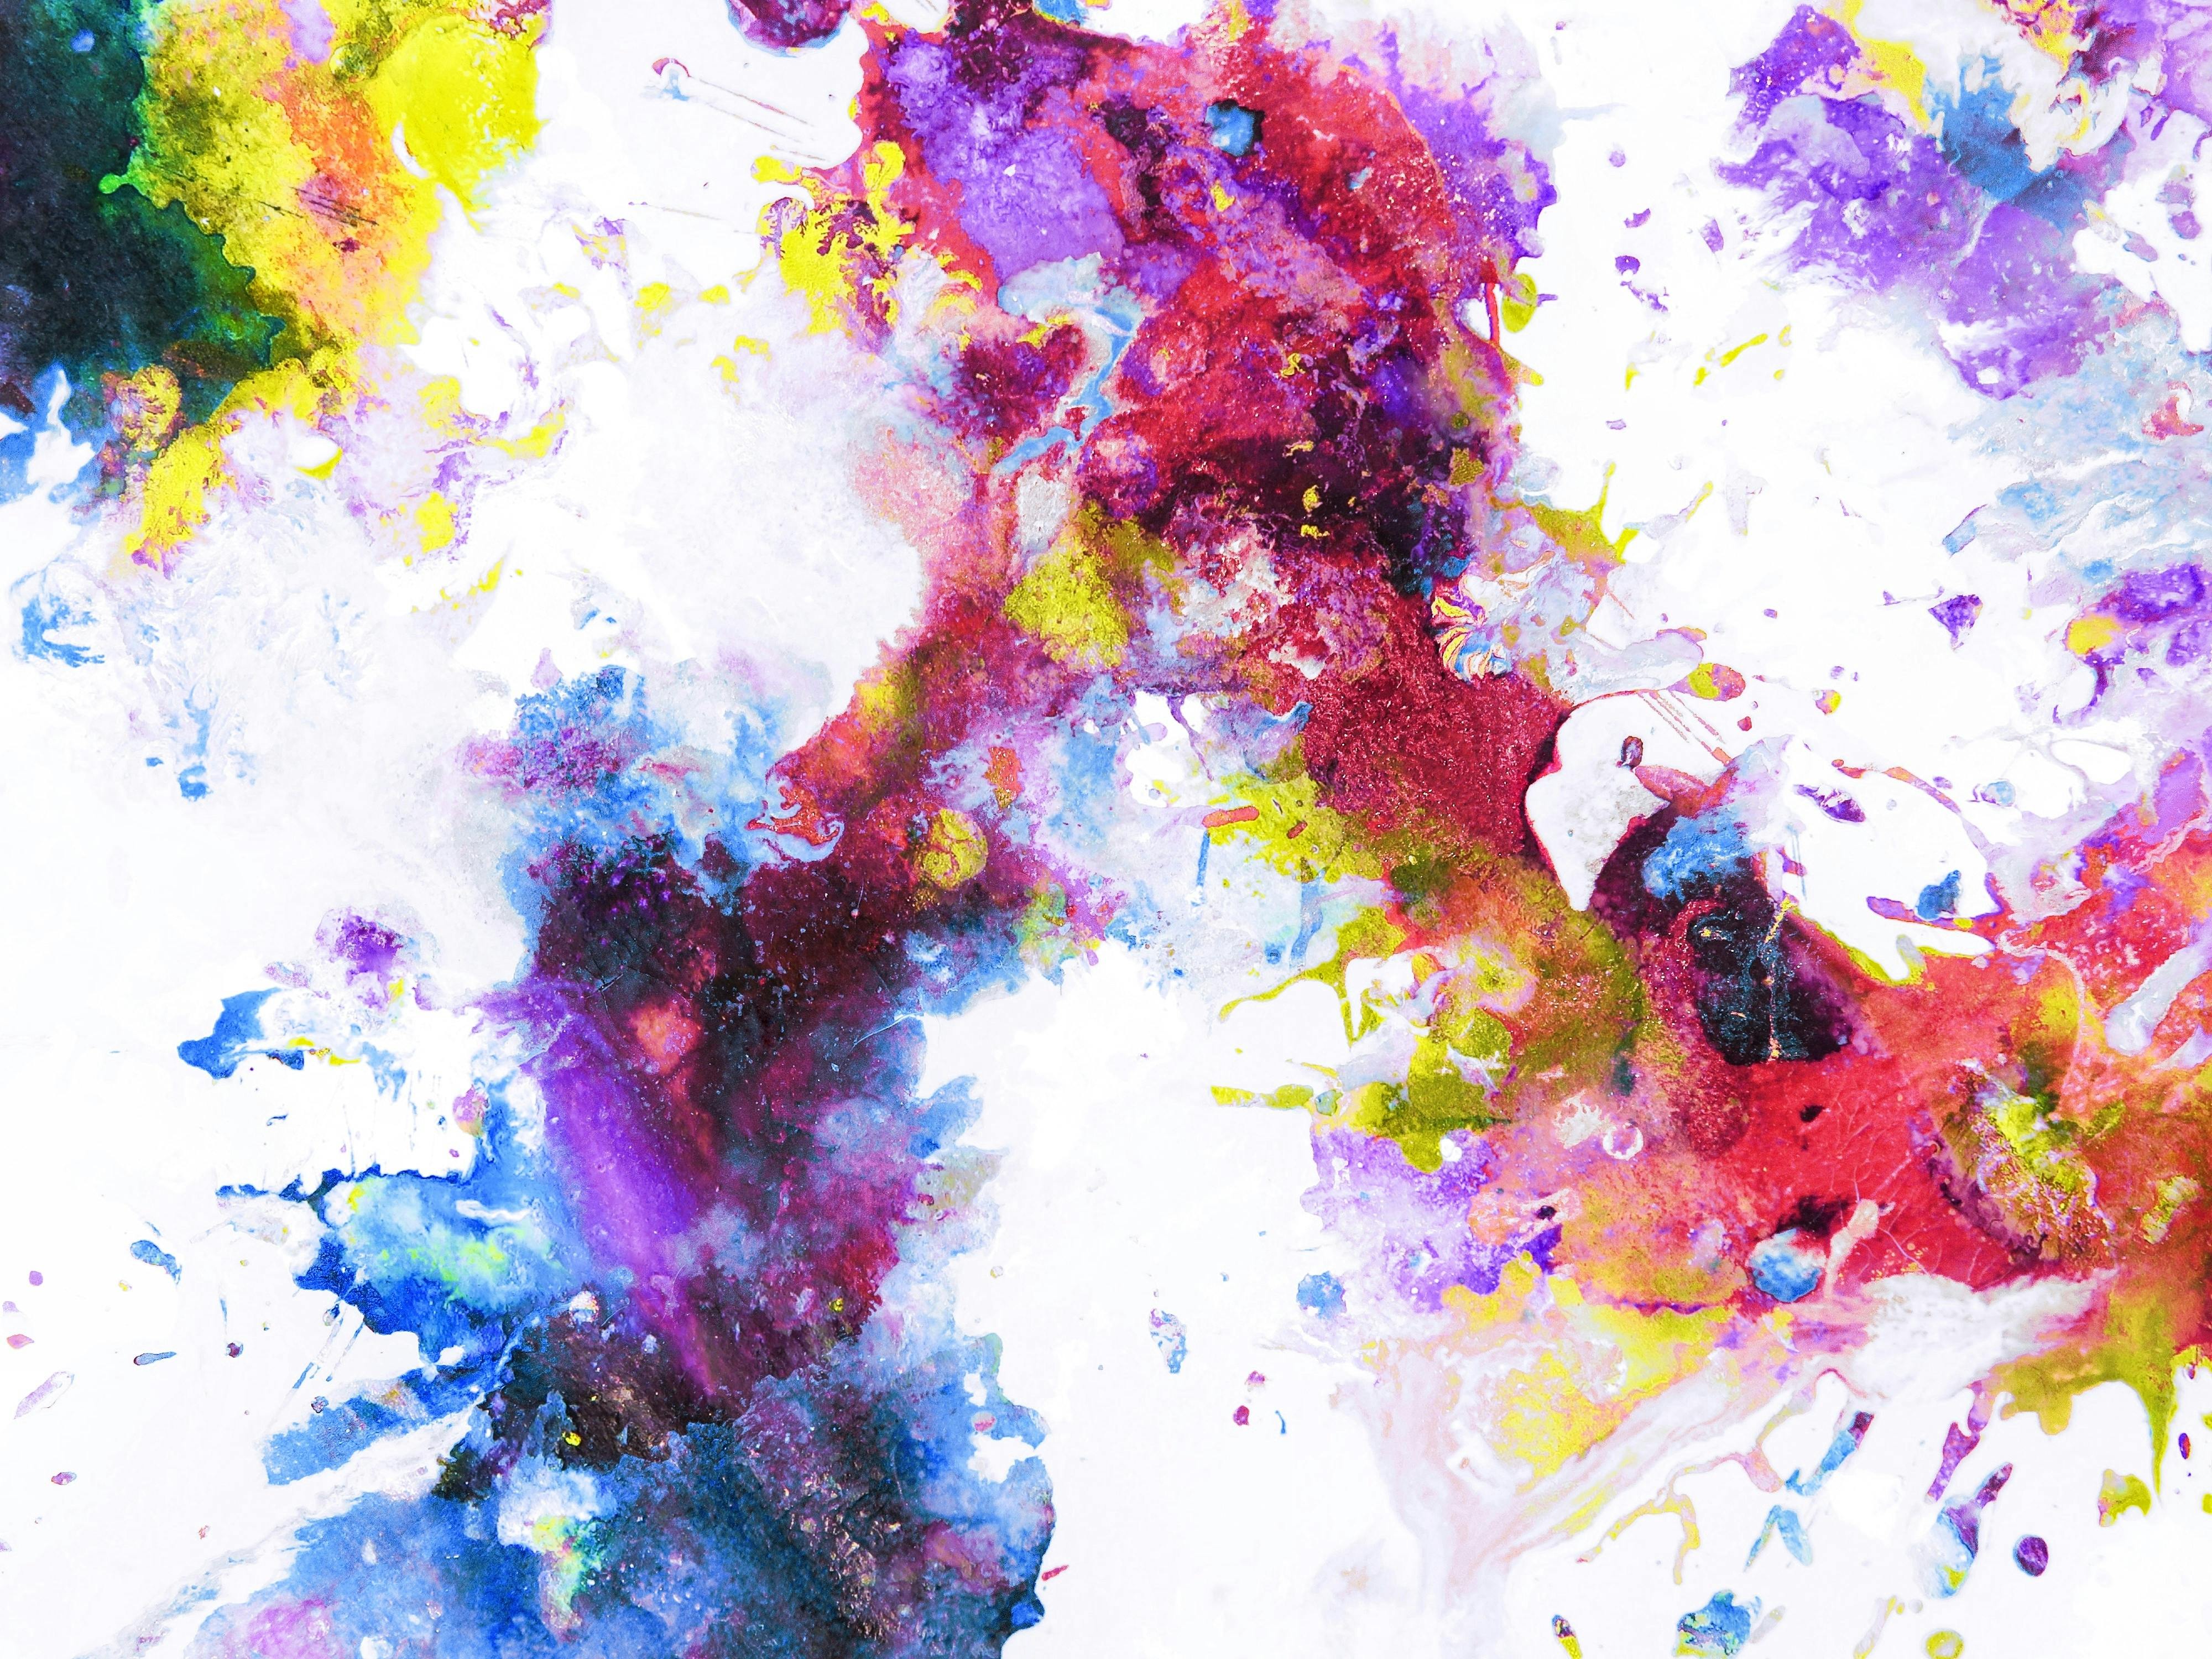 Colorful Music Festival Vector Art PNG Festival Of Colors Splash Holi  Splash Background PNG Image For Free Download  Paint splash background  Watercolor splash png Watercolor splash